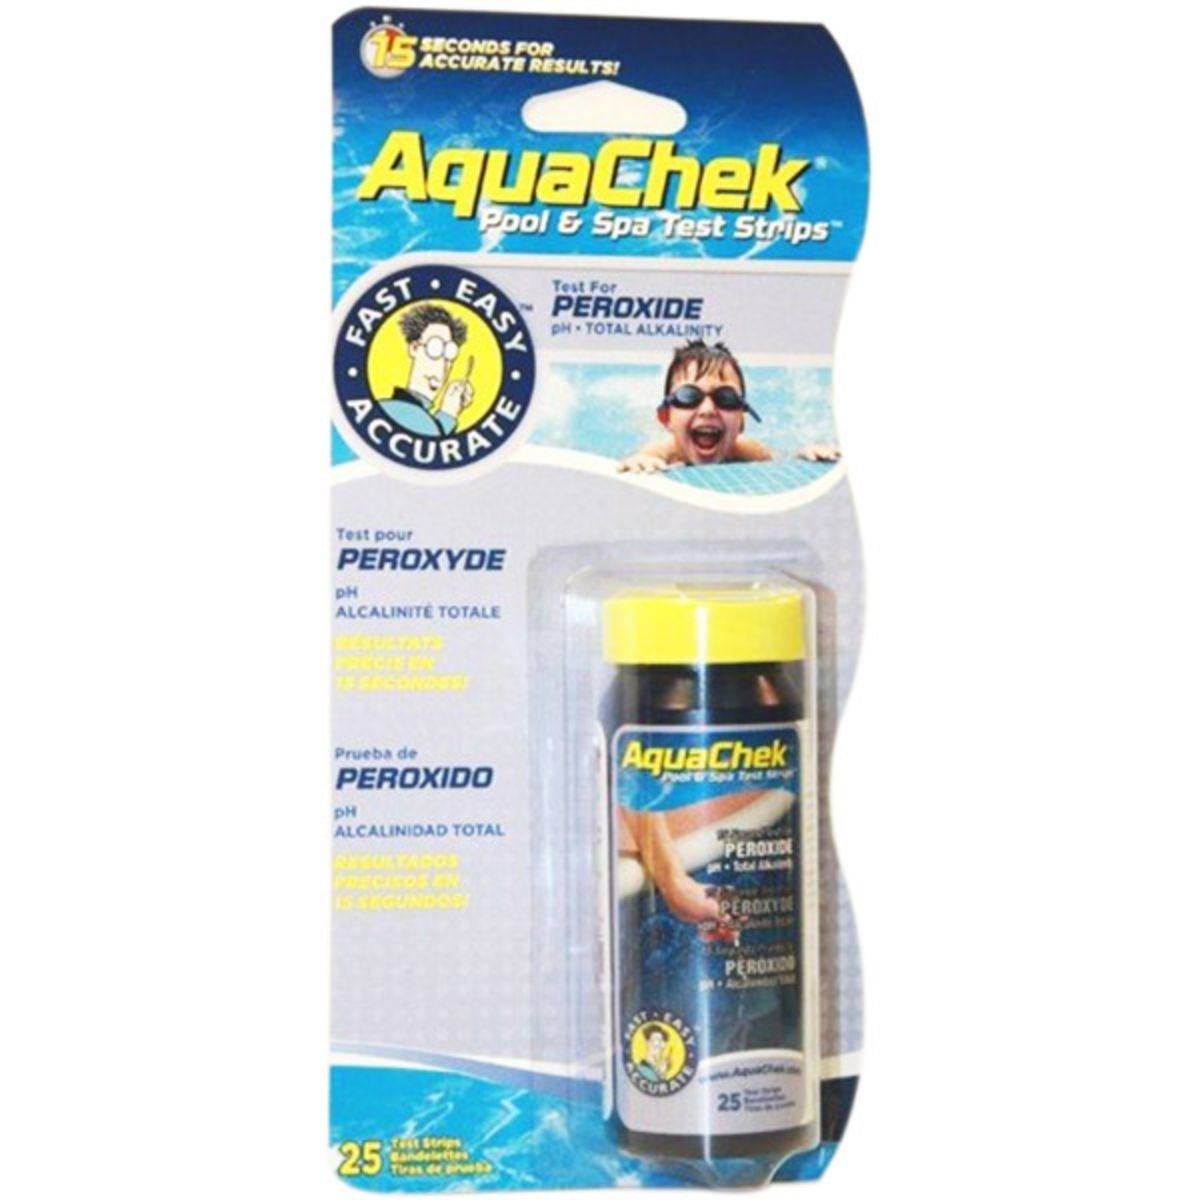 Aquachek 25 bandelettes test pour peroxyde - aquaperox